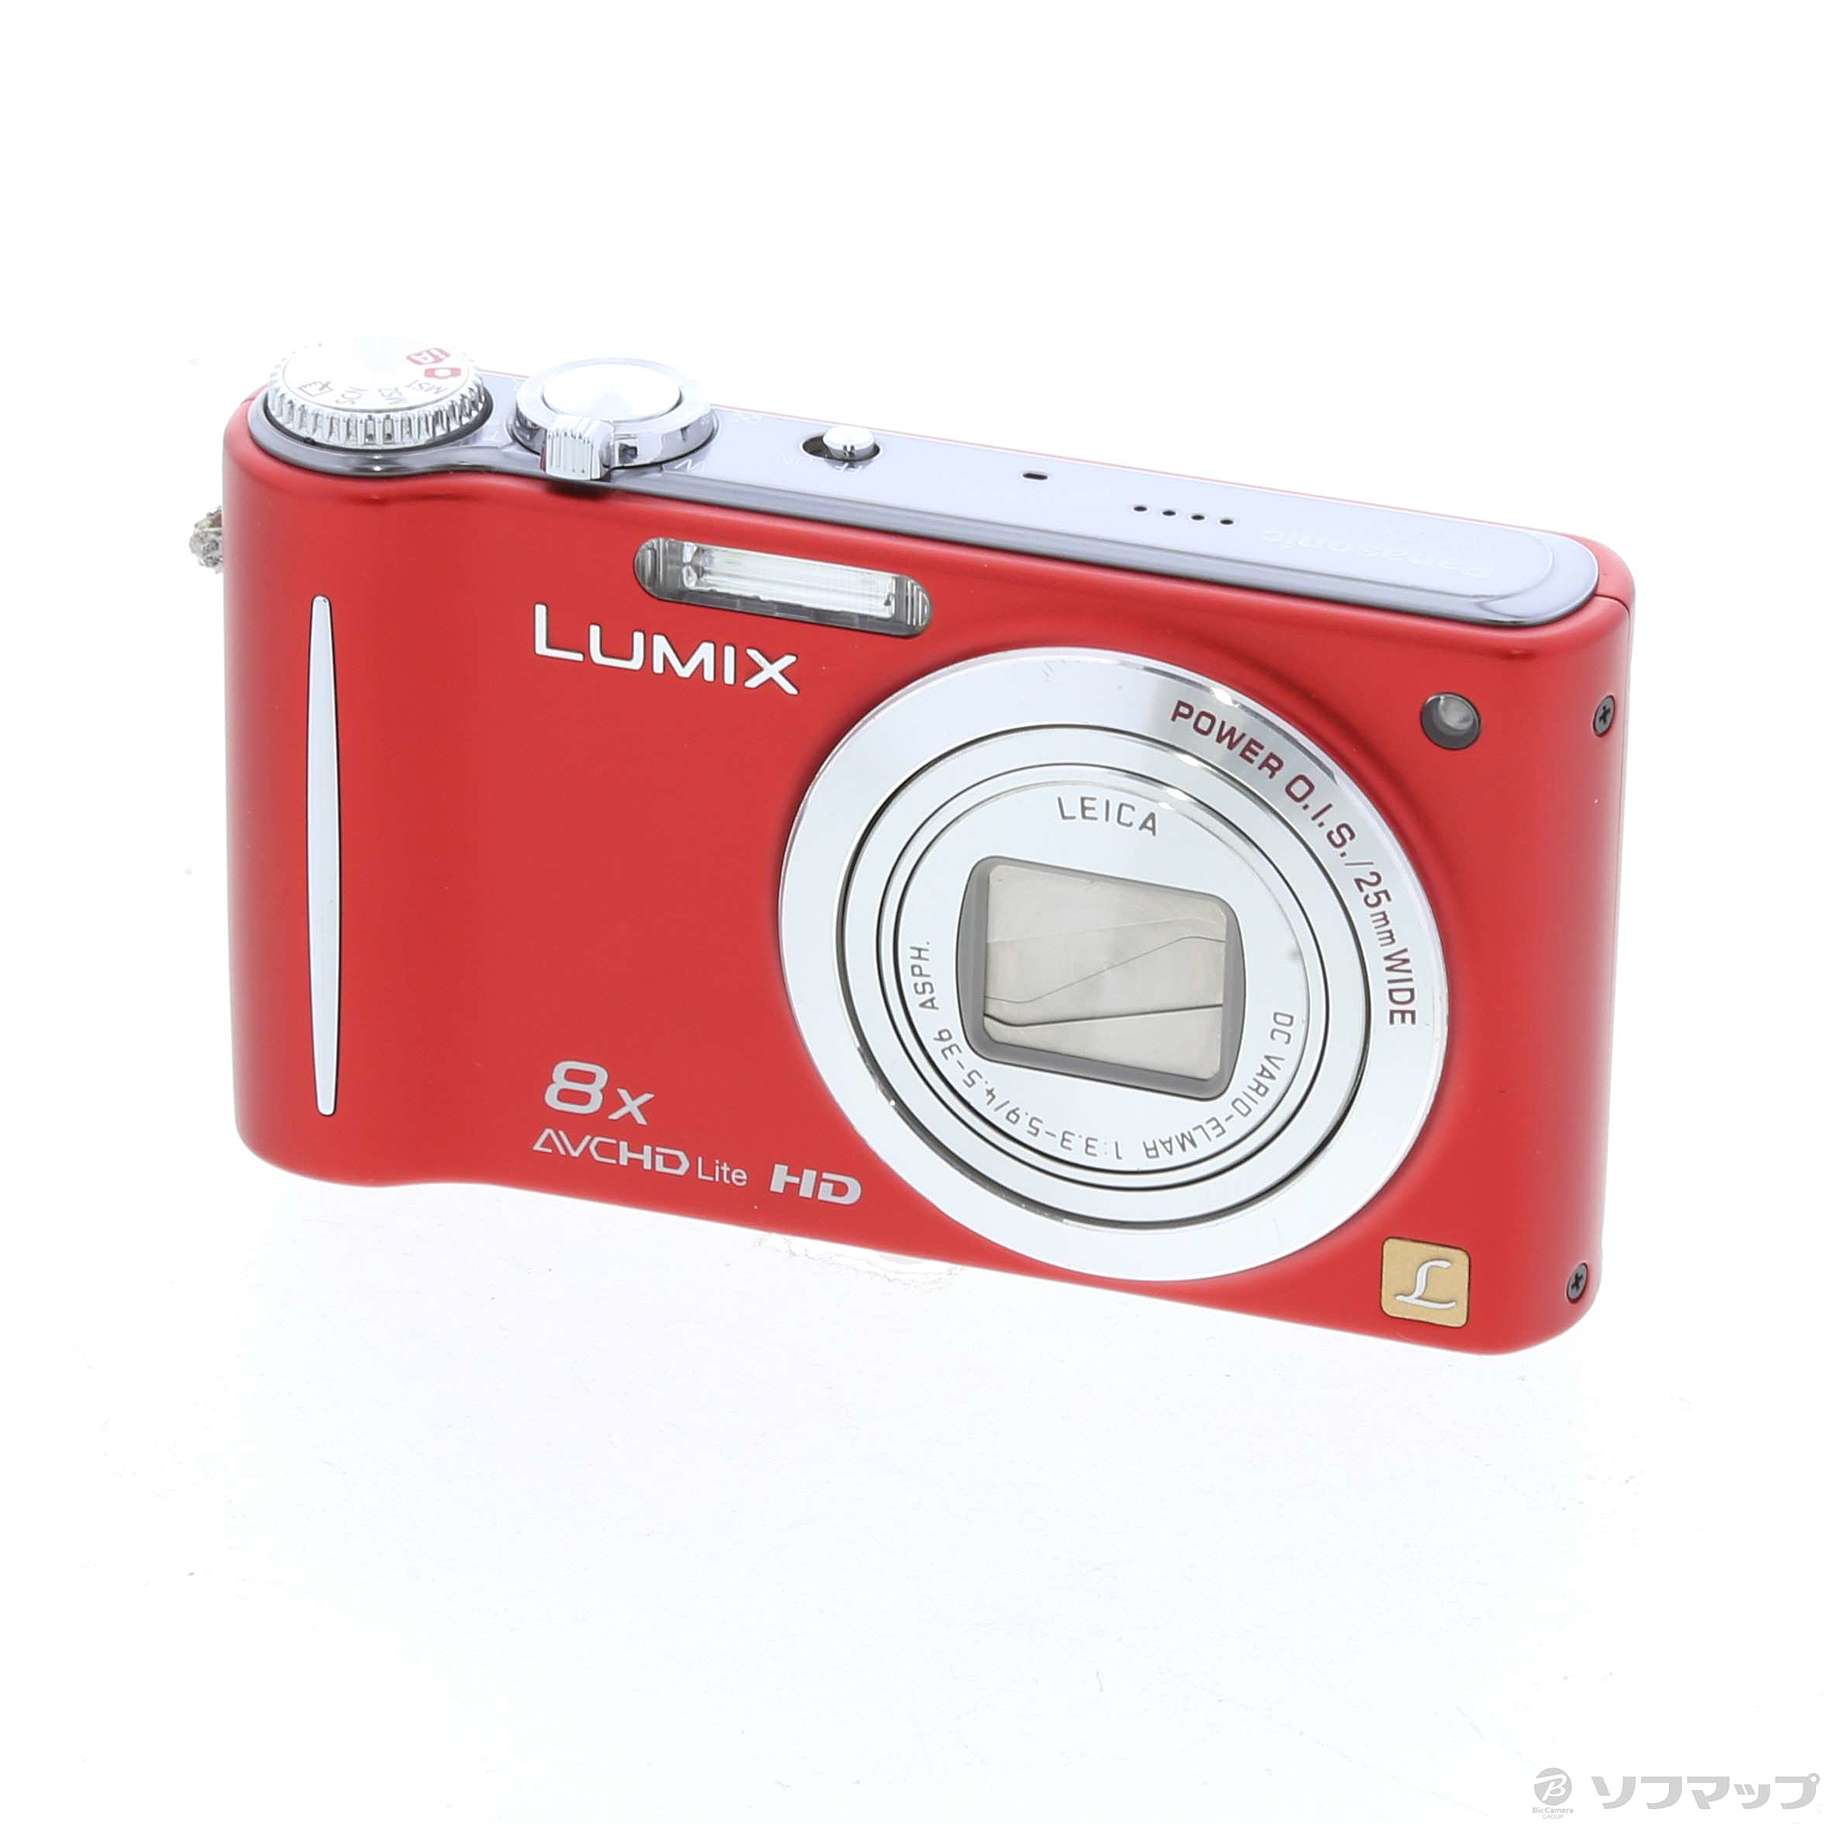 Panasonic 【ecoま】Panasonic LUMIX DMC-ZX3 レッド コンパクトデジタルカメラ